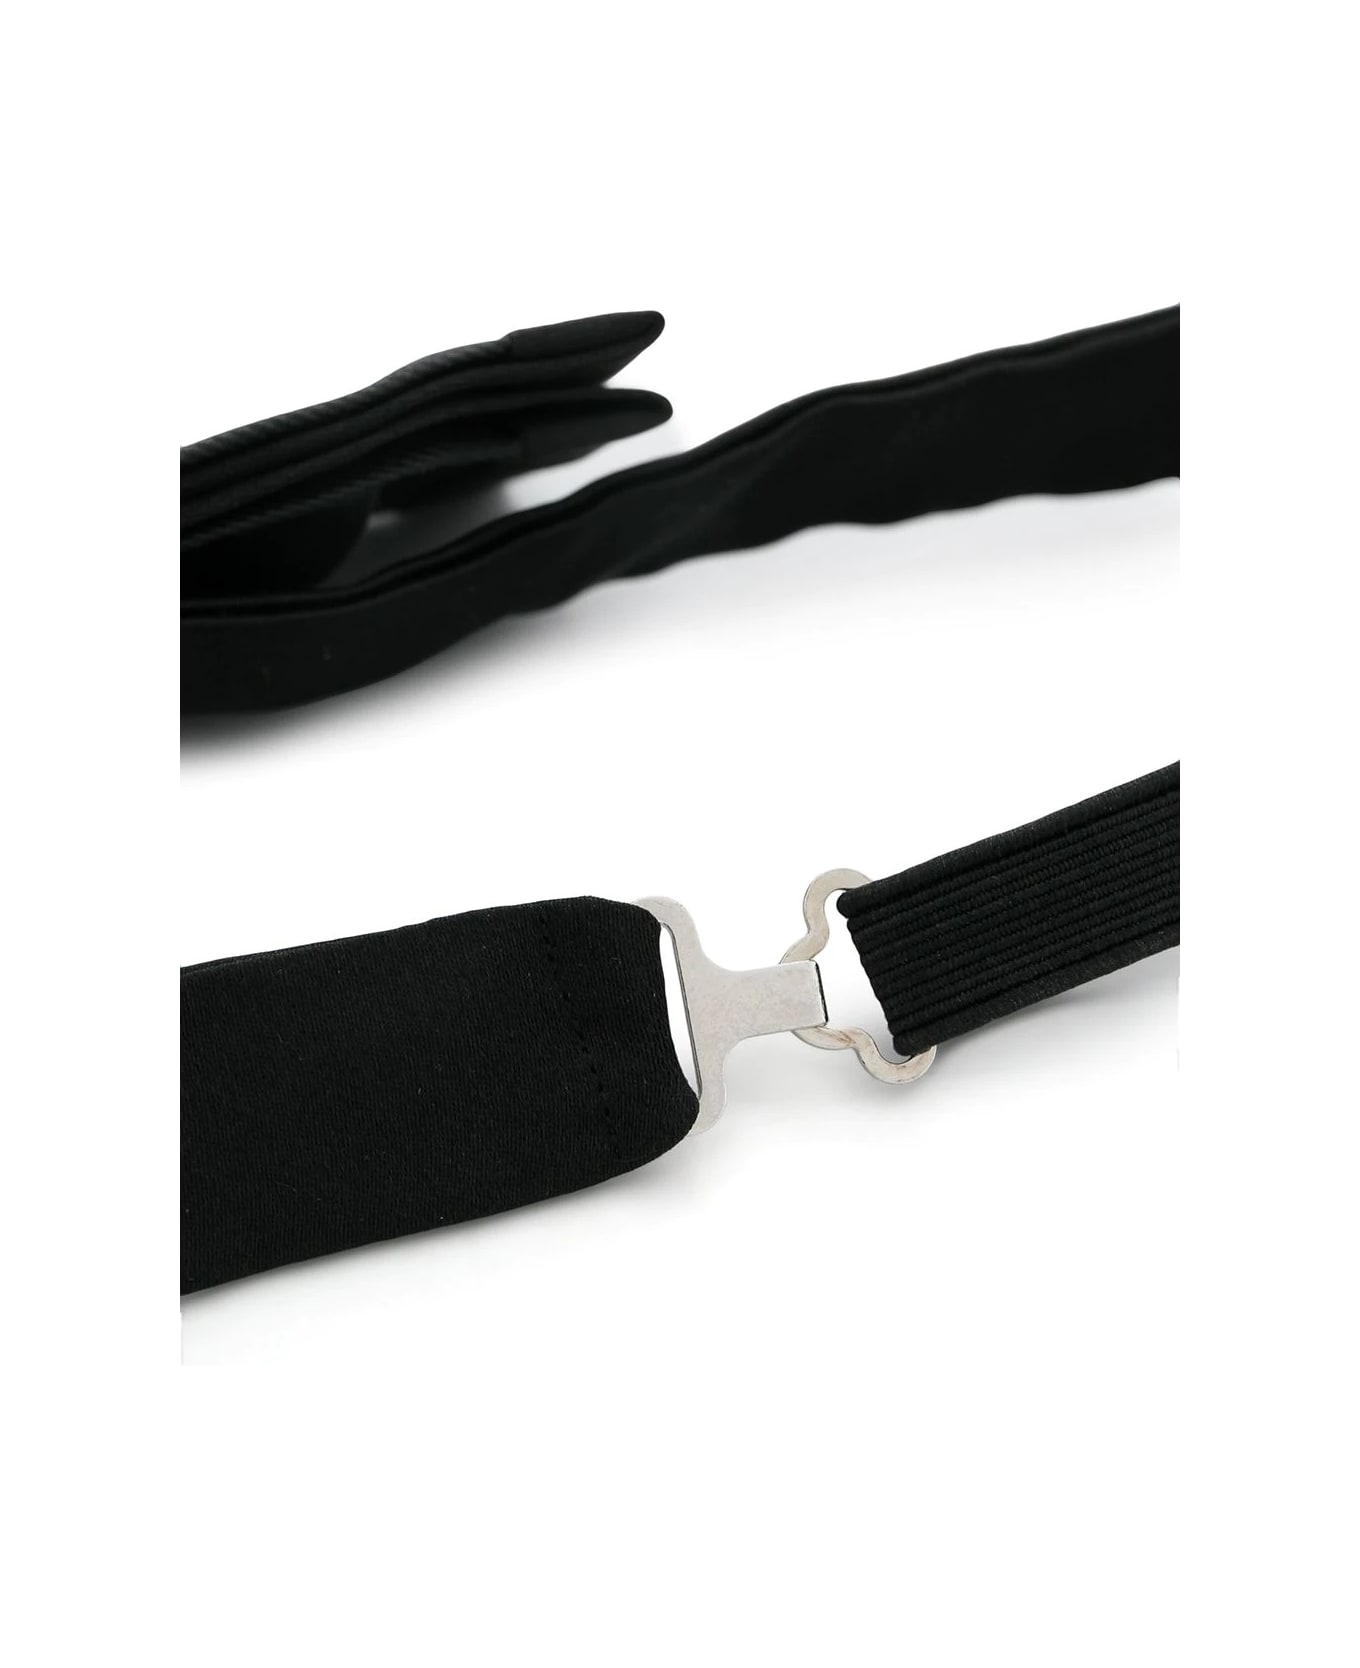 Dsquared2 Black Bow Tie - Black